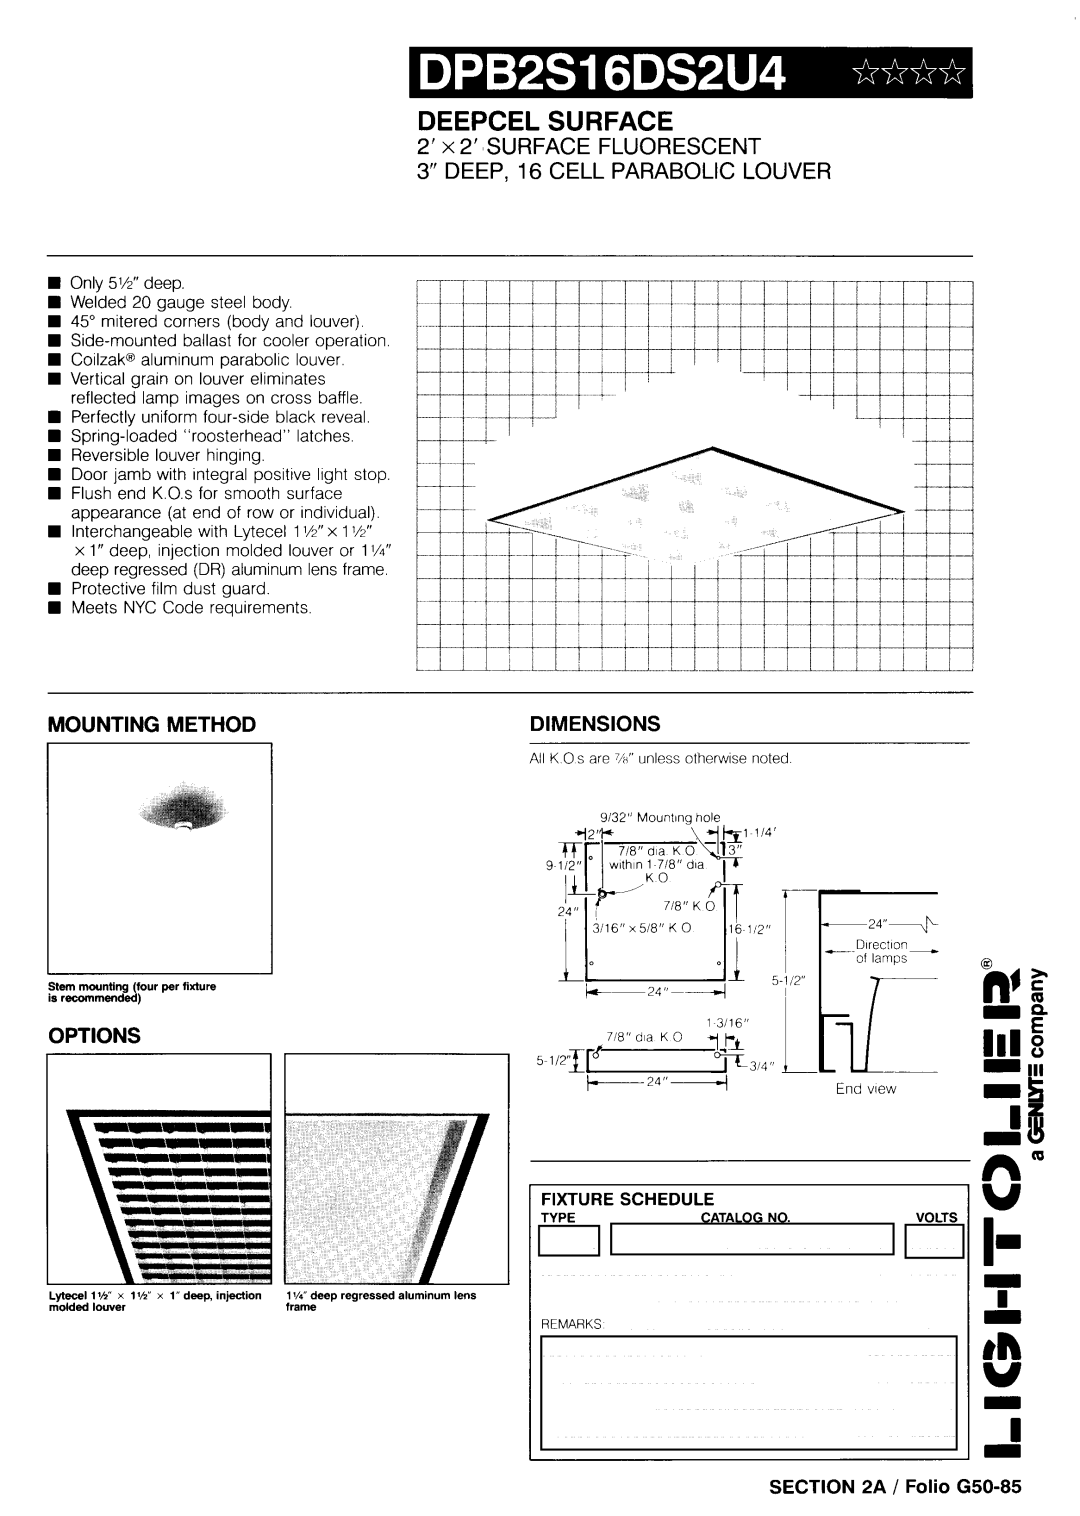 Lightolier DPB2S16DS2U4 dimensions Deepcel Surface, Mounting Method, Options, Dimensions, A/ Folio G50-85 